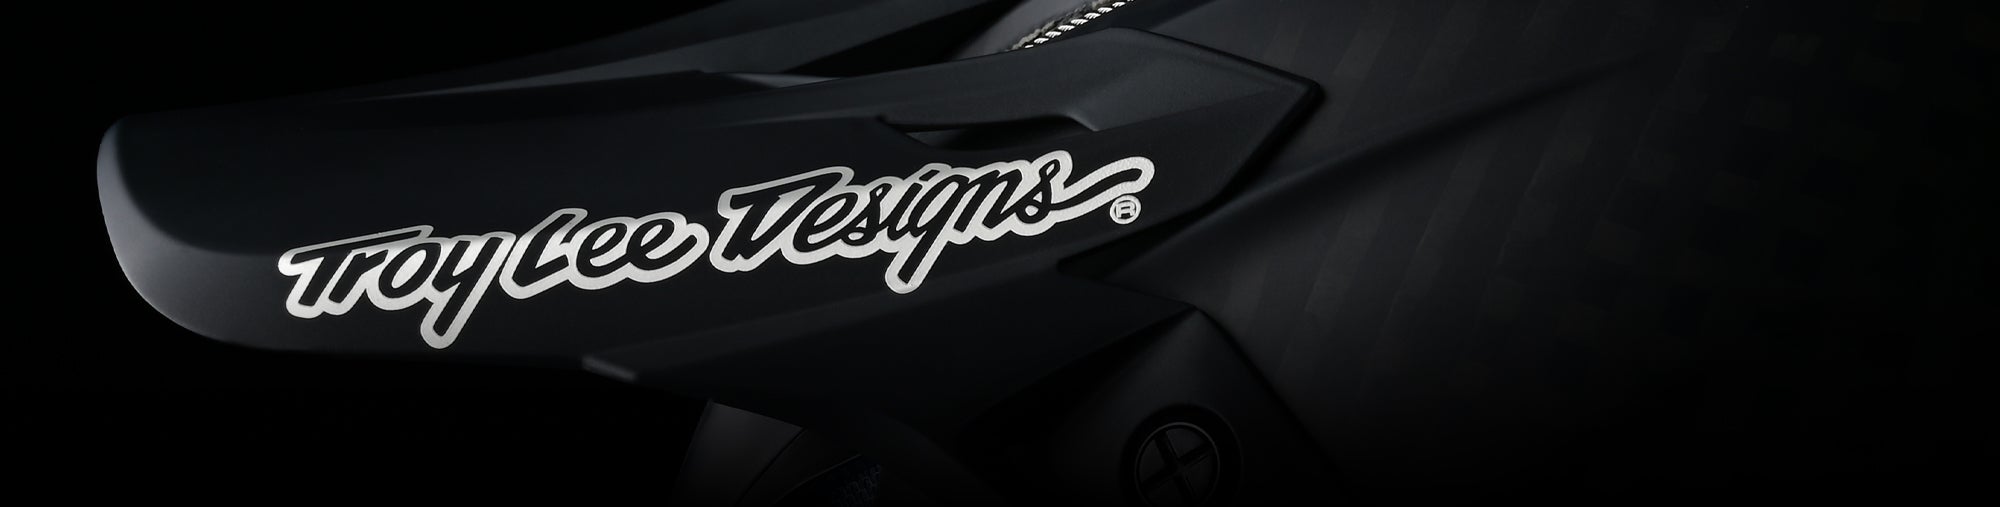  Troy Lee Designs SE5 Carbon Adult Motocross Dirt Bike Helmet  W/MIPS, Qualifier White / Bronze, X-Small : Automotive